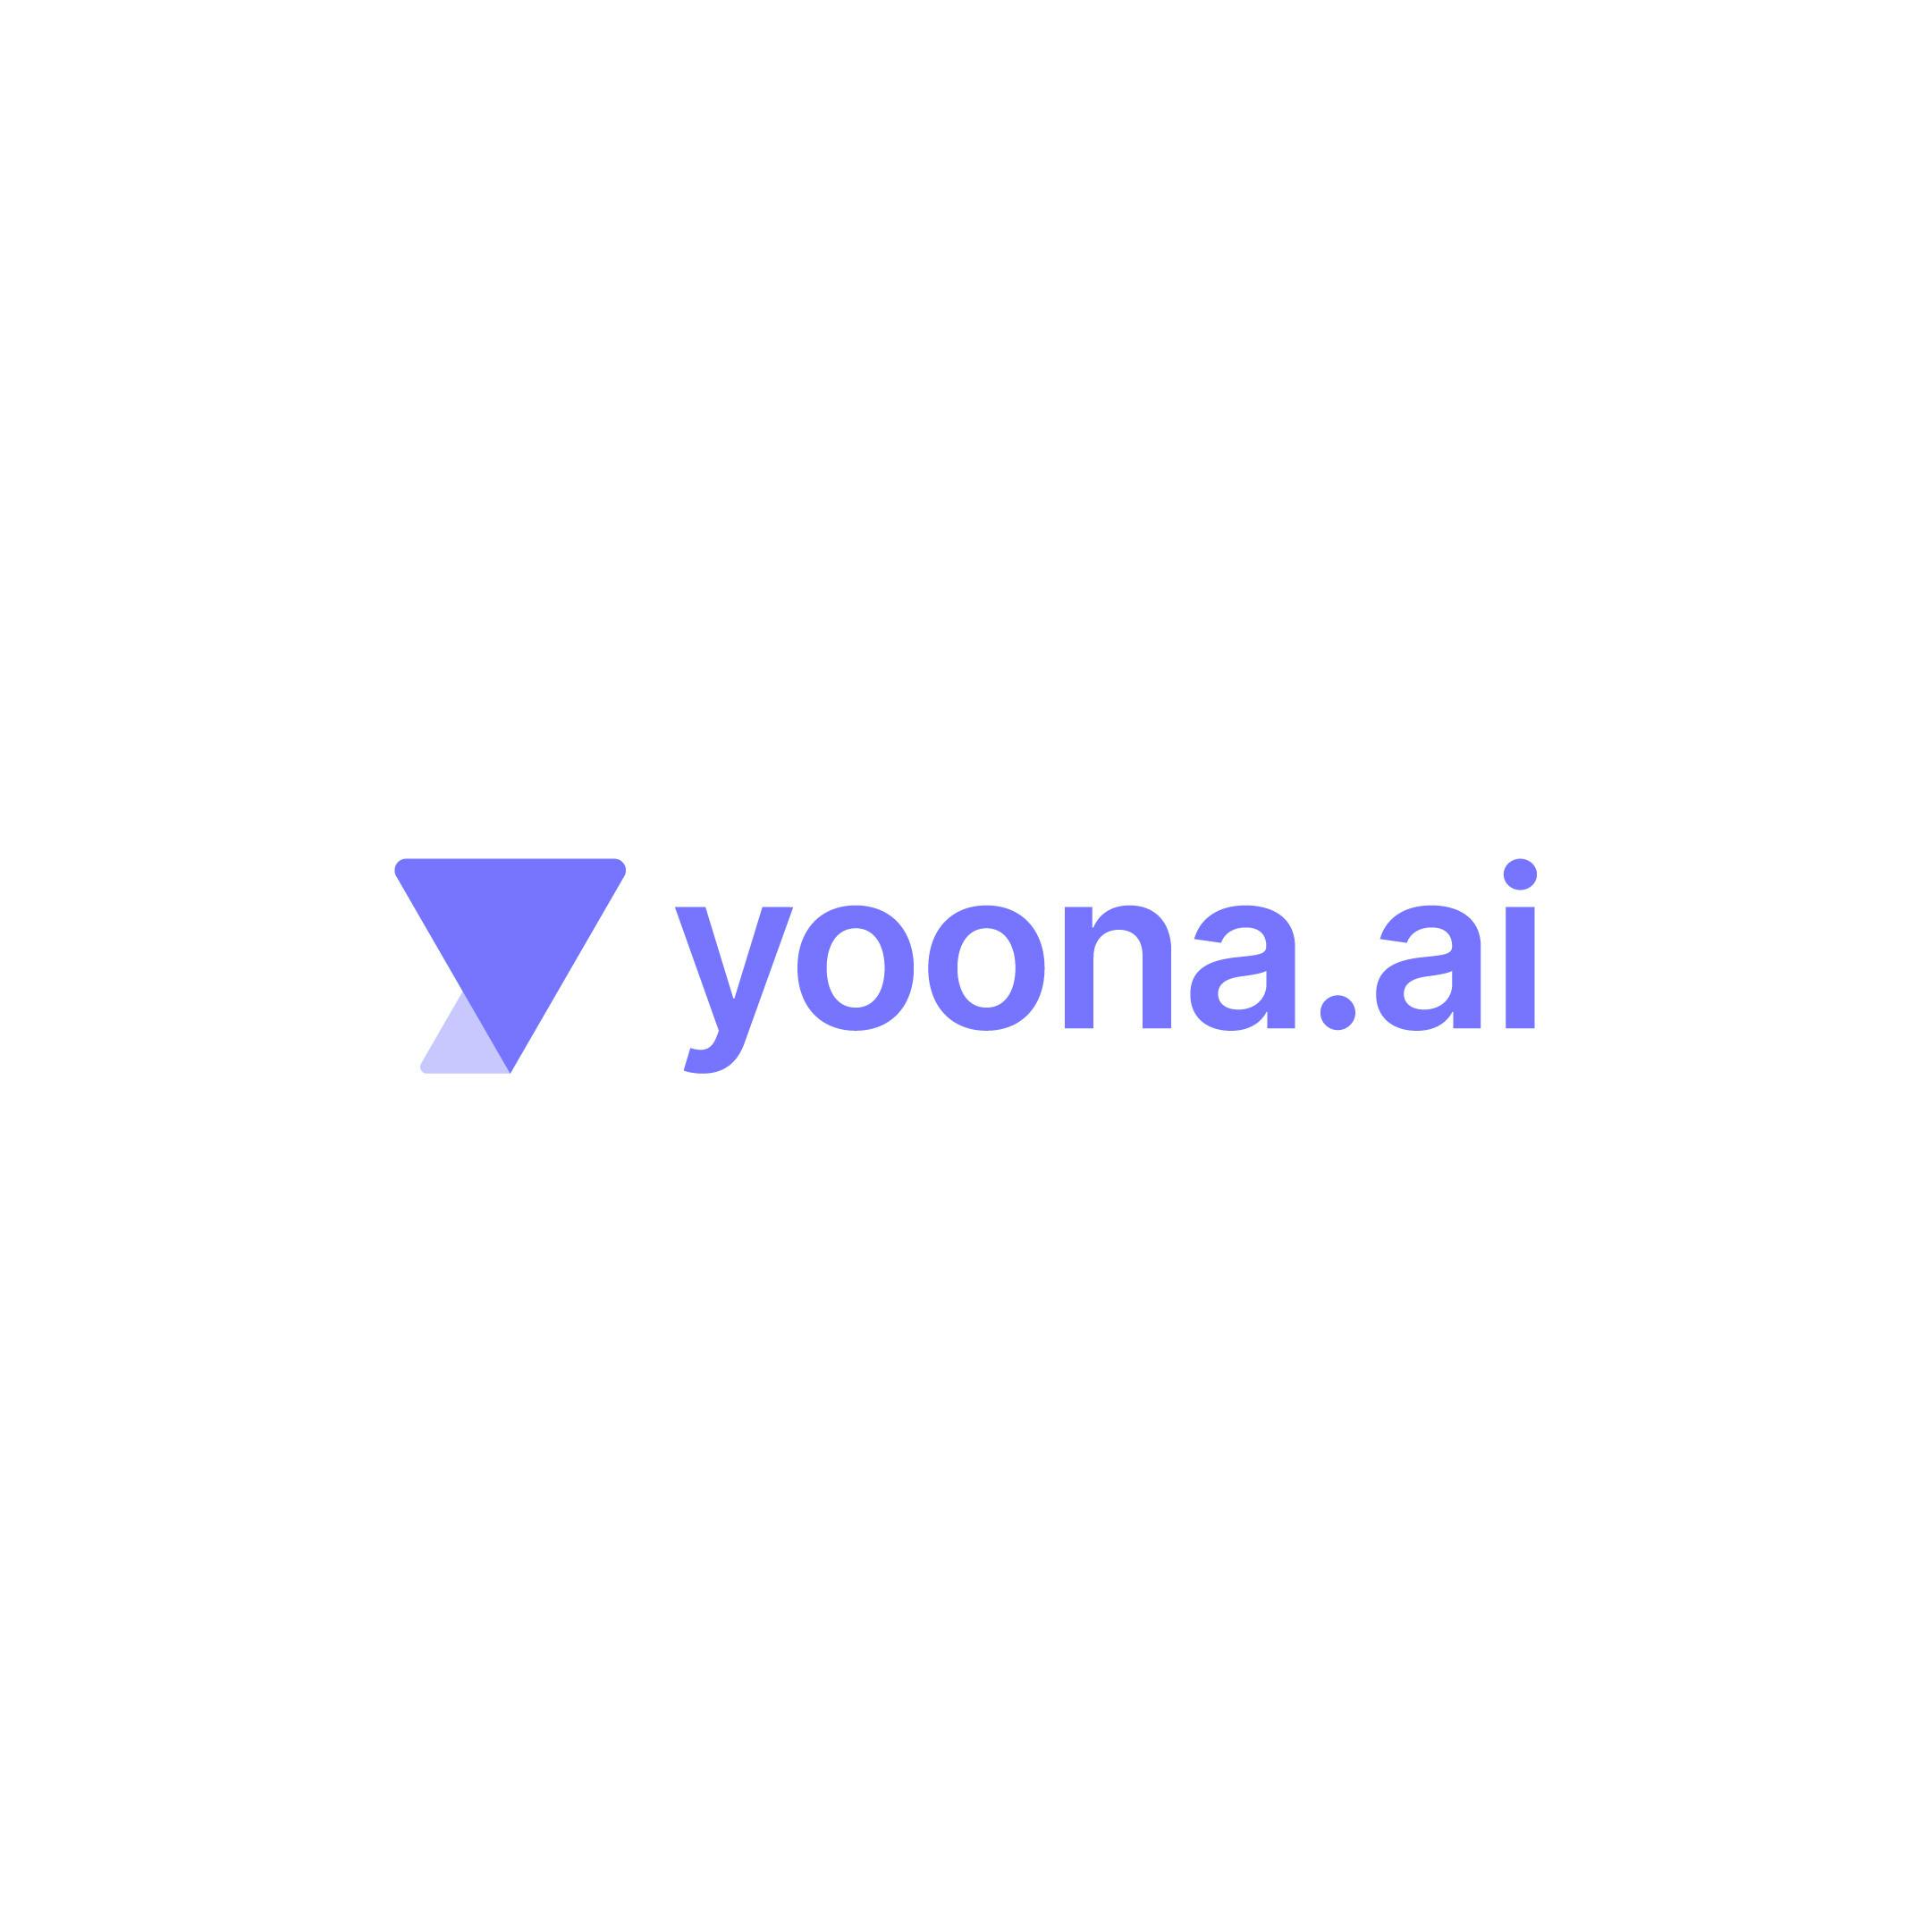 Yoona Technology Design System